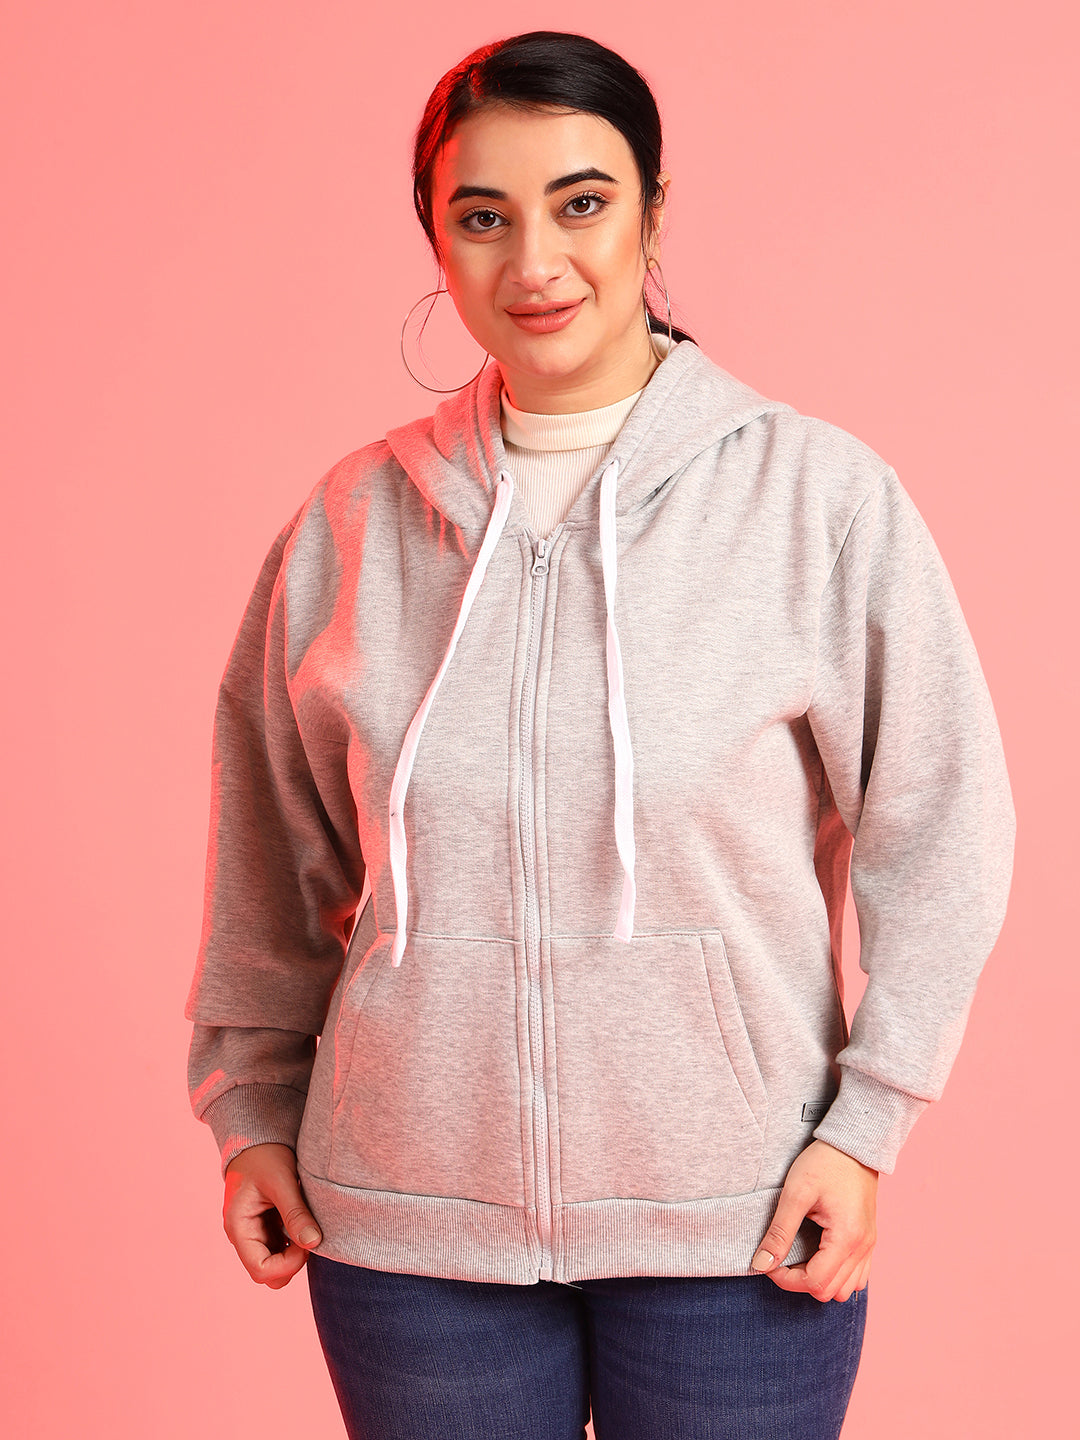 Plus Size Women's Sweatshirts Online - Ladies Sweatshirts